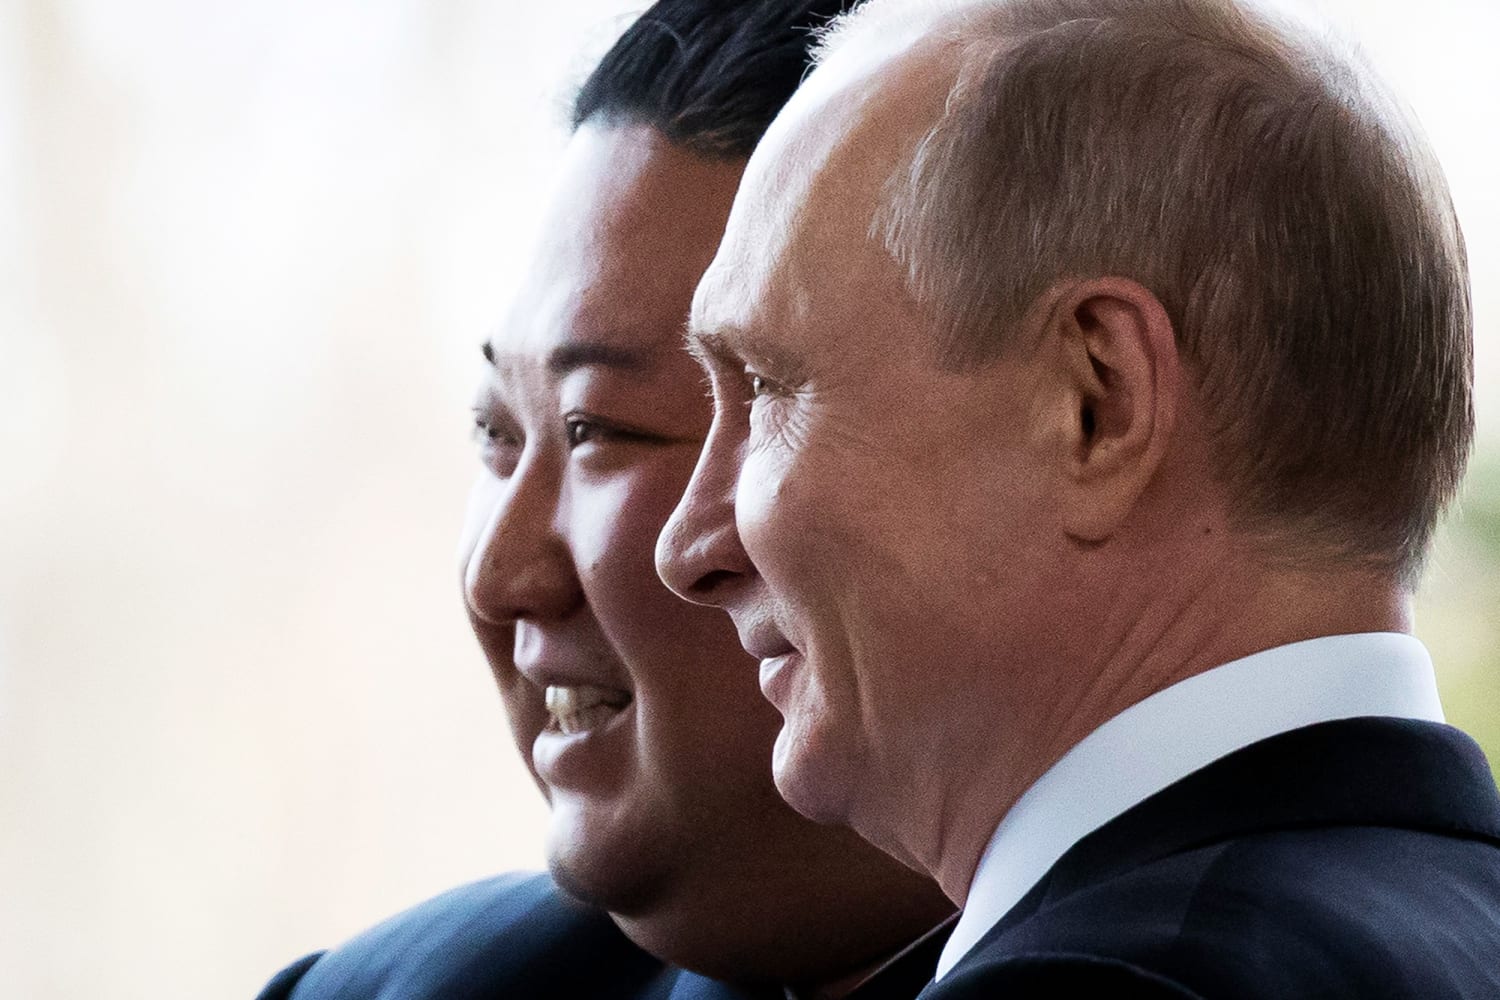 Kim Jong Un invites Putin to North Korea after Russia summit